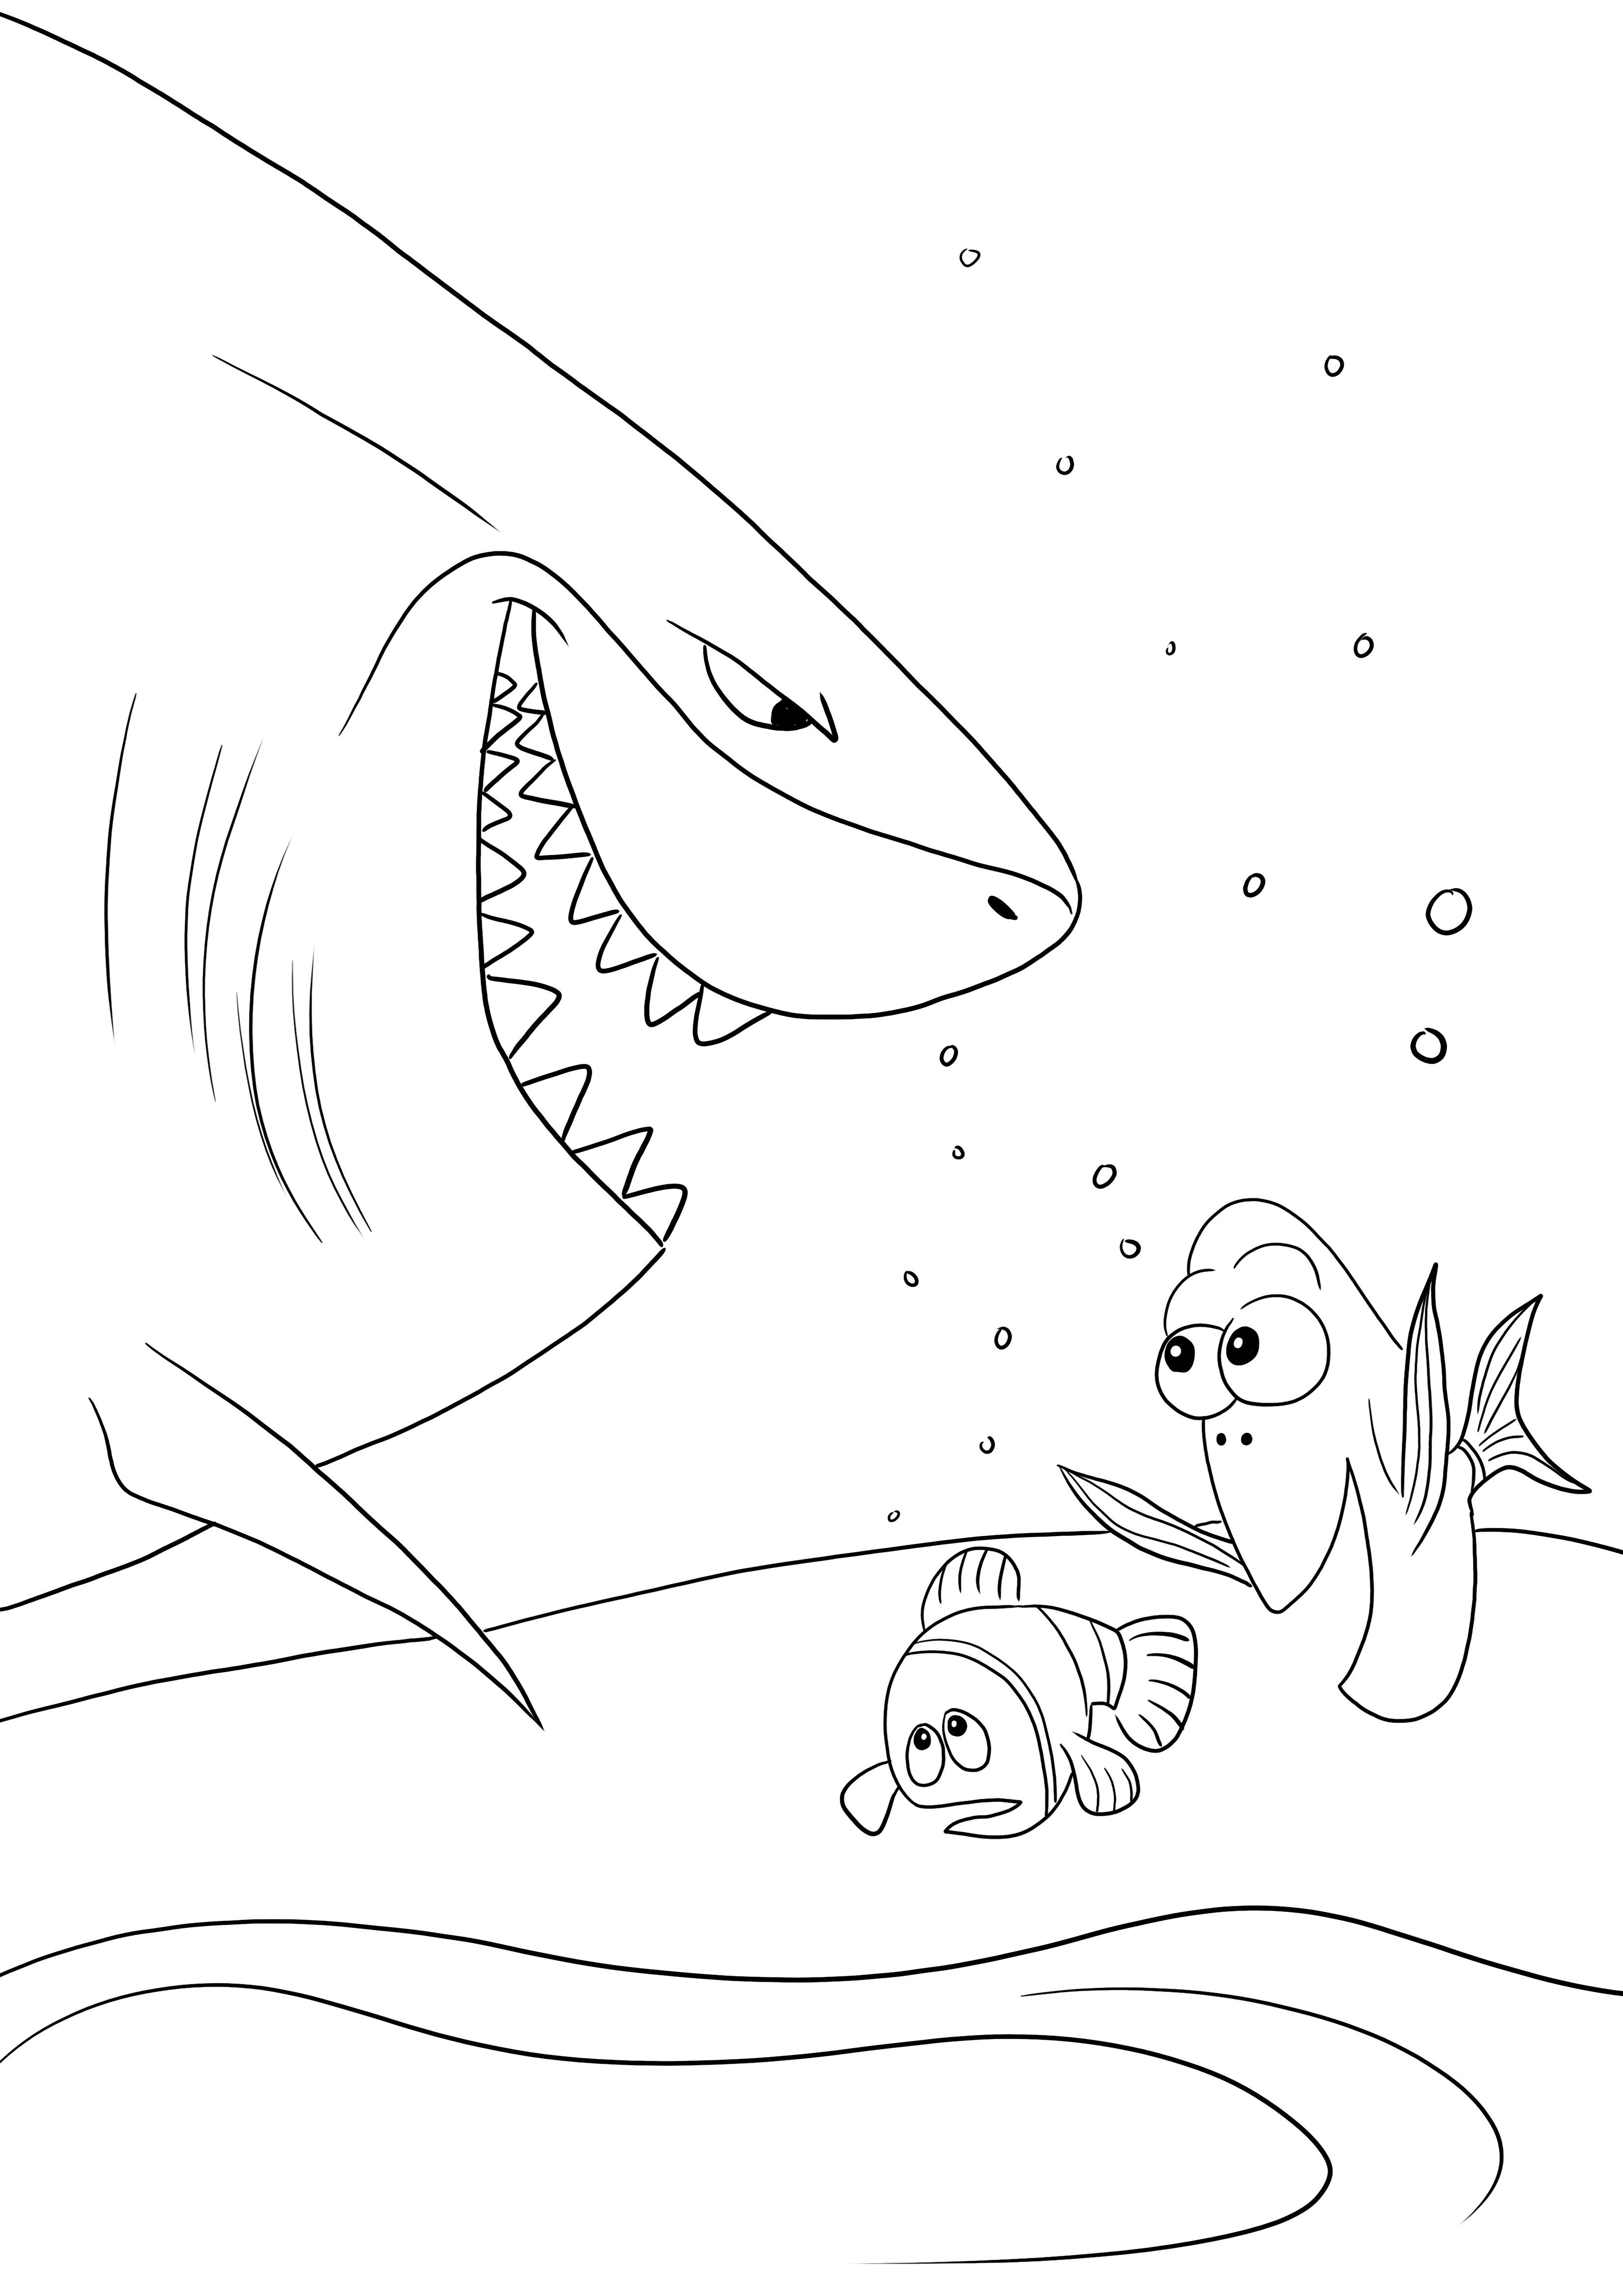 Bruce-Dory-Nemo bertemu bersama bebas untuk dicetak atau disimpan untuk gambar nanti